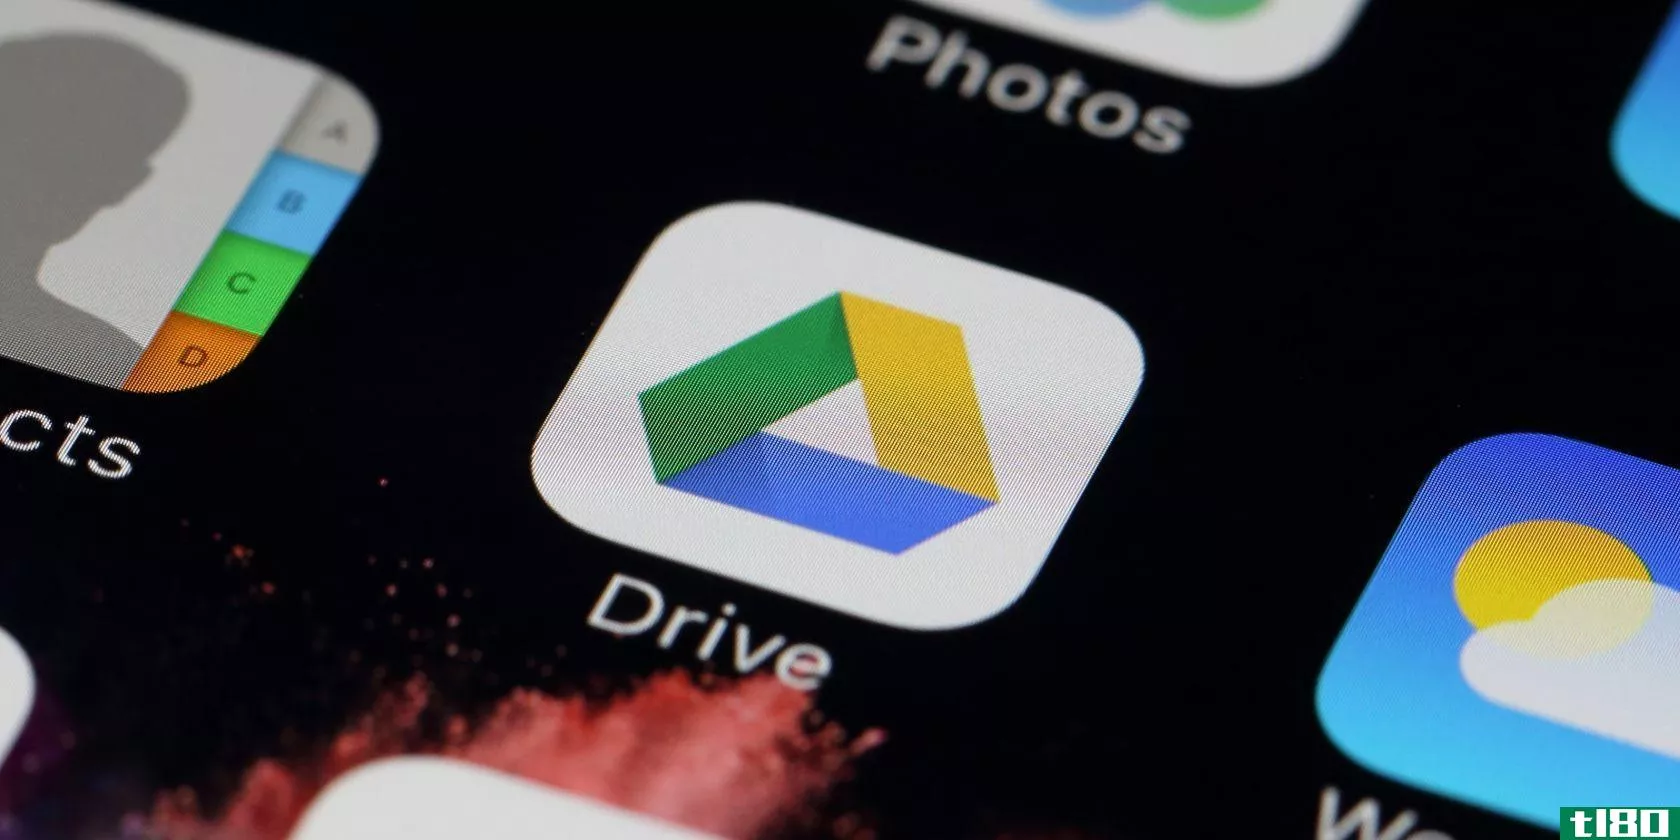 google drive app icon on phone